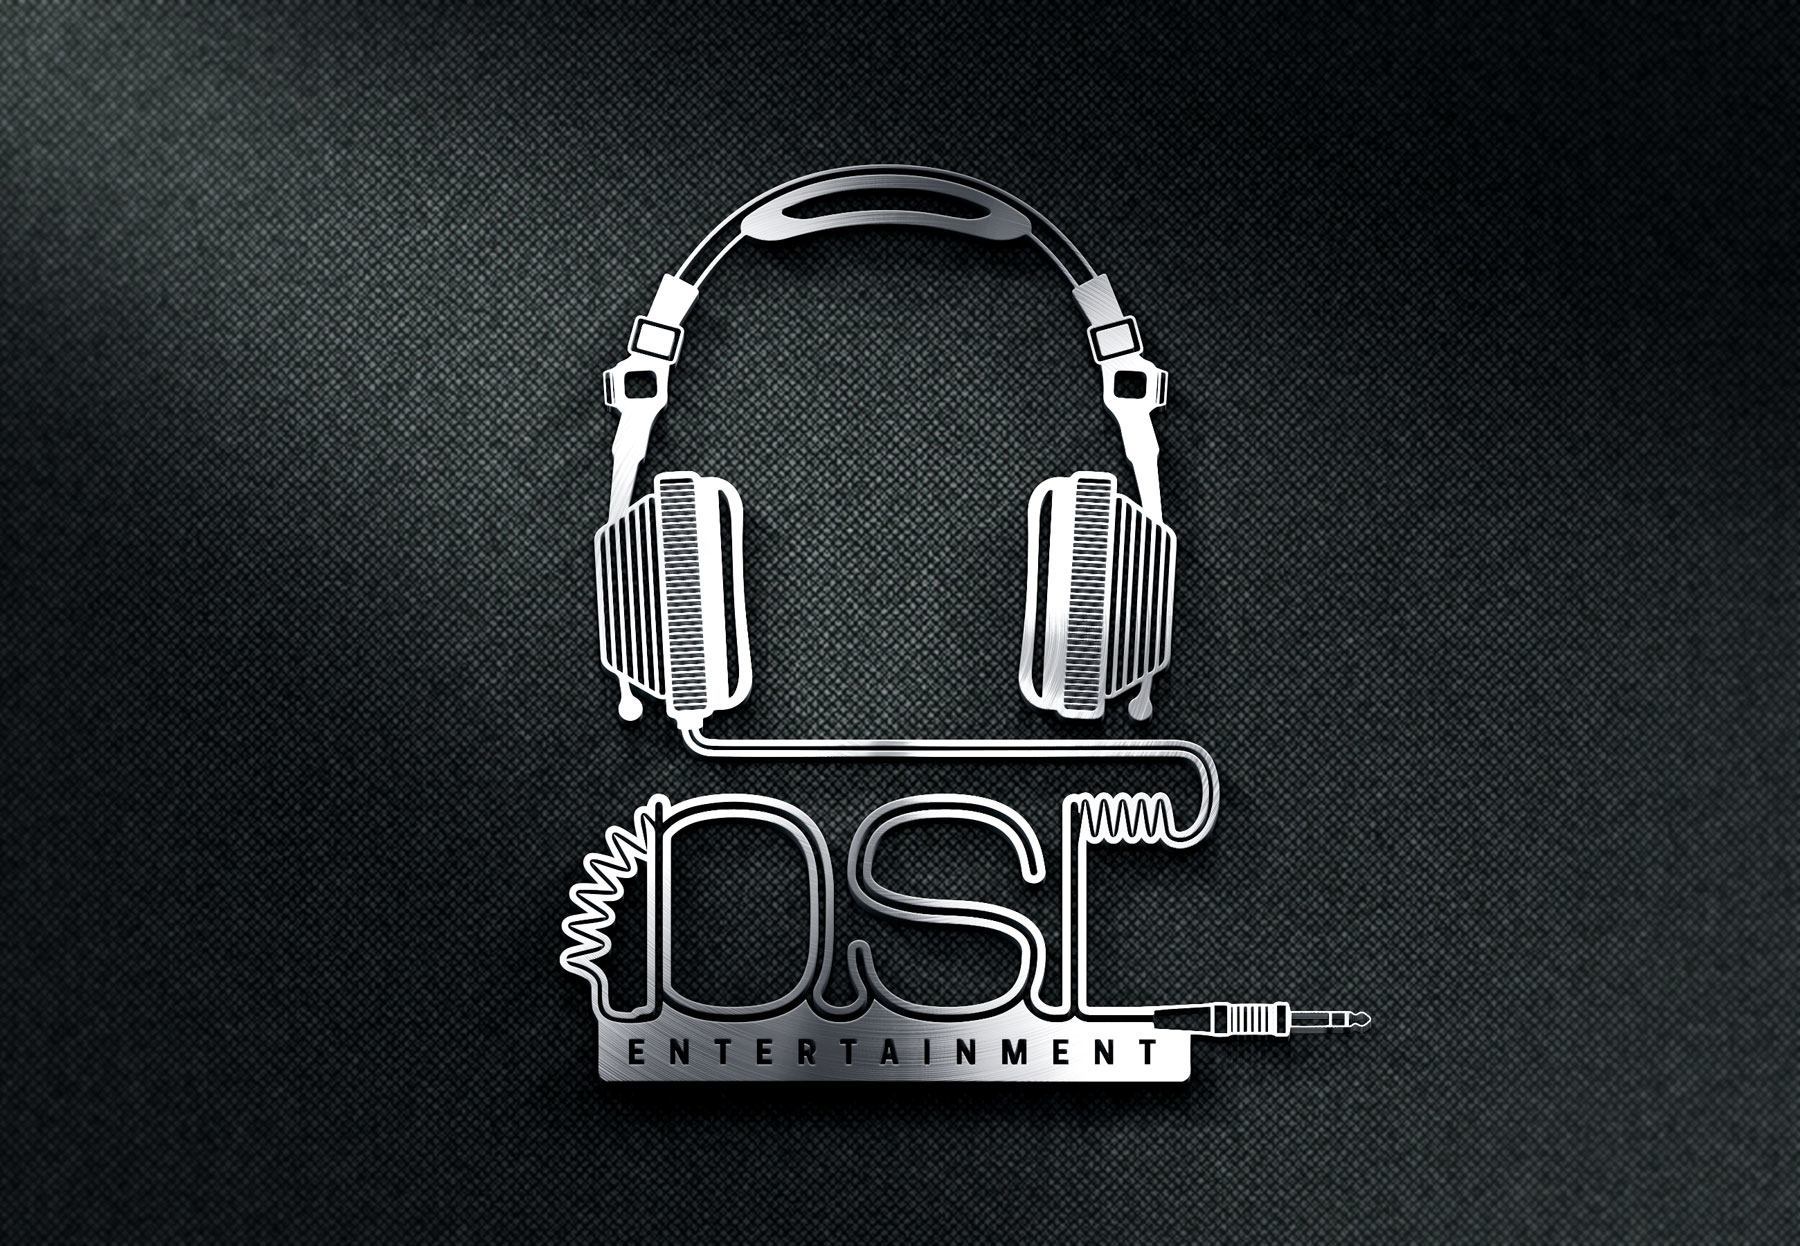 DSL Logo - DSL Entertainment Logo Shot Design